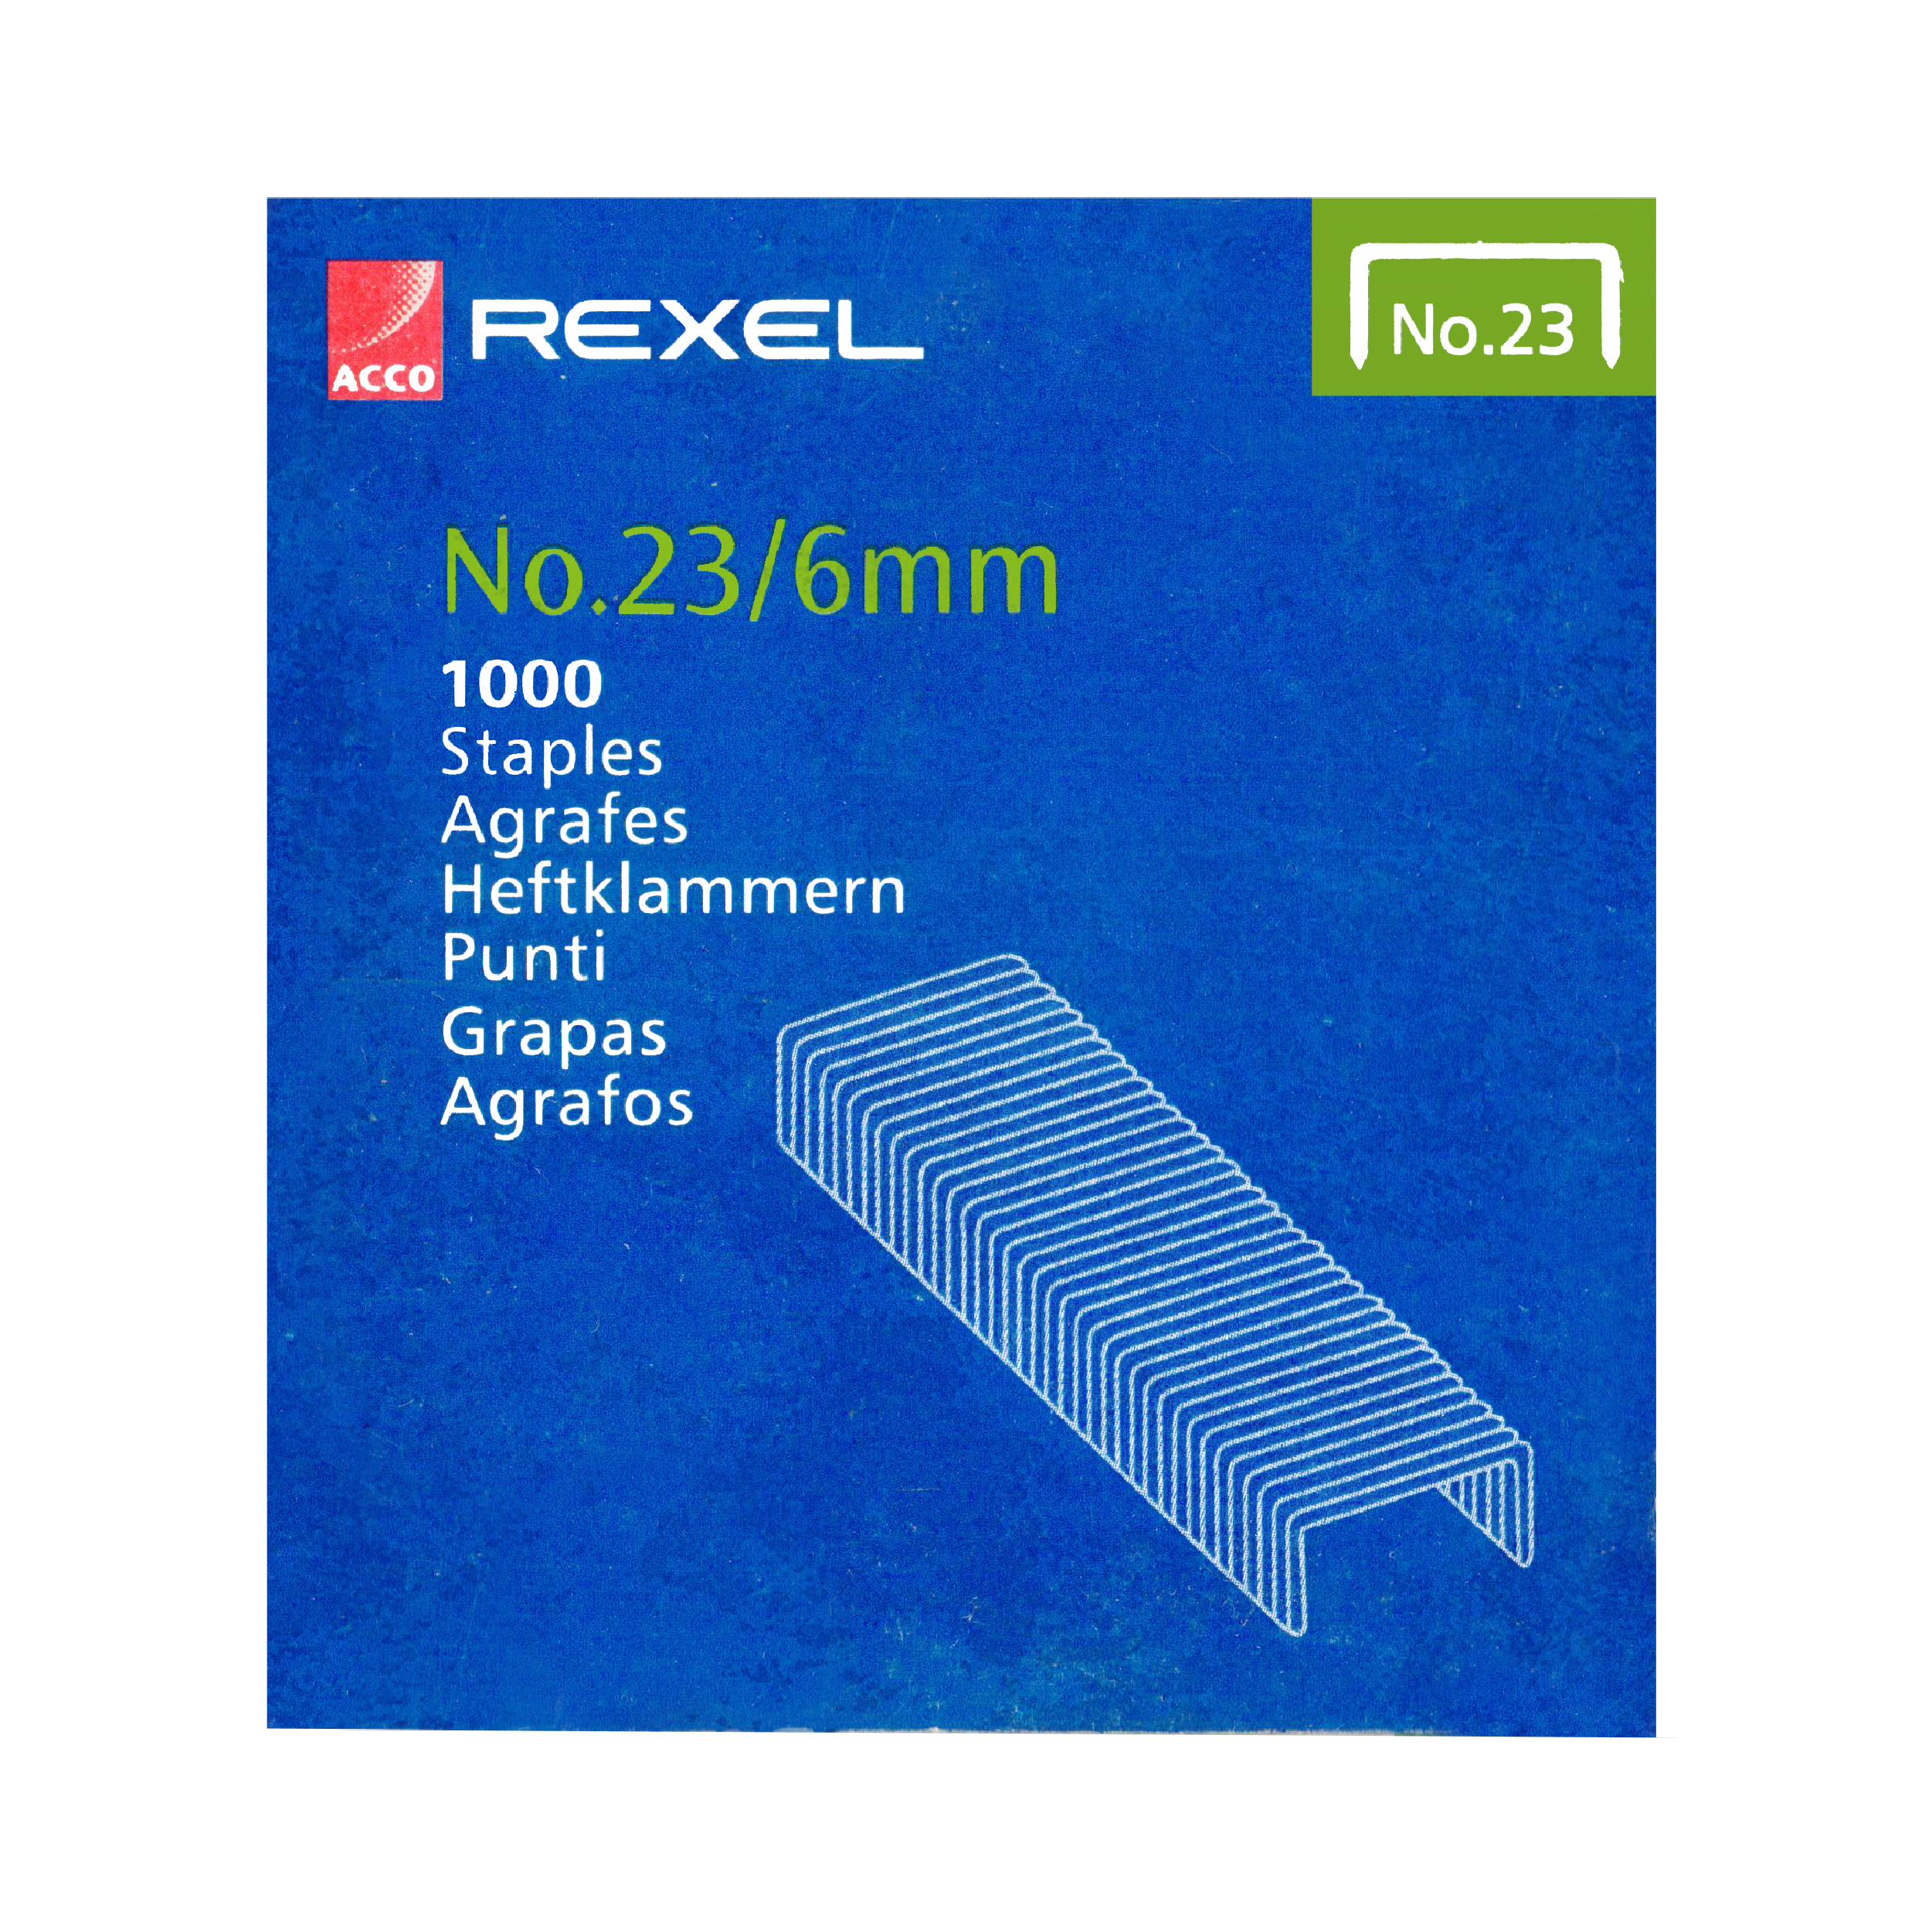 Rexel Staples, 1000/Box (No.23/6)